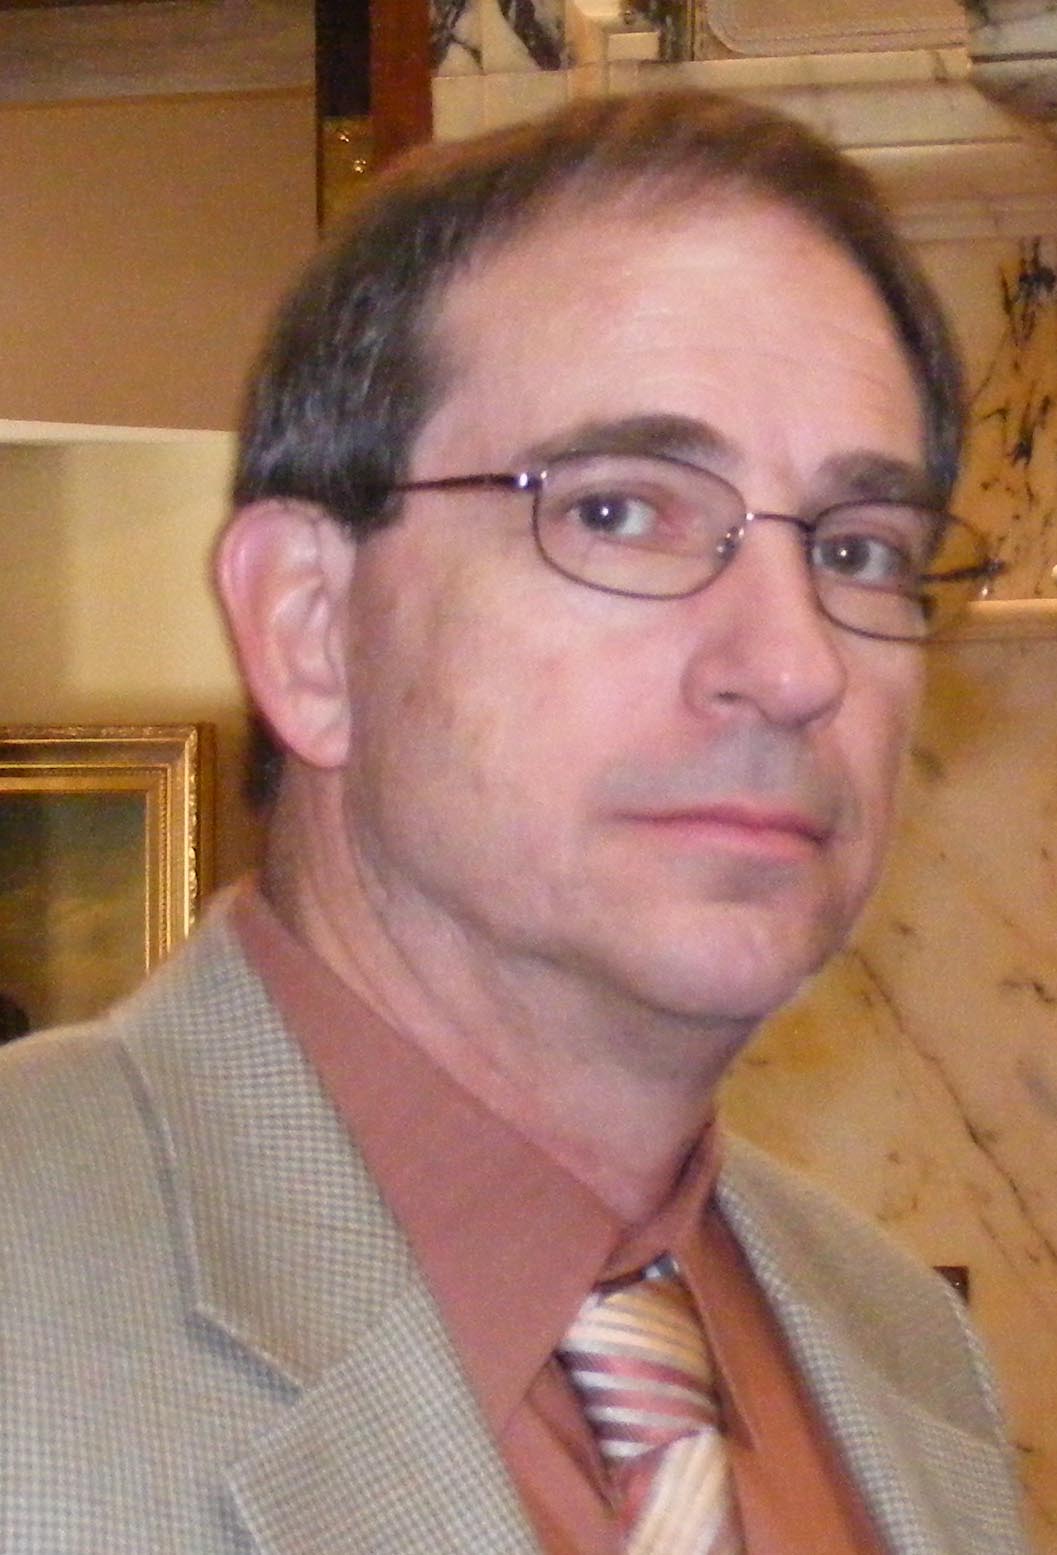 Edwards in 2008